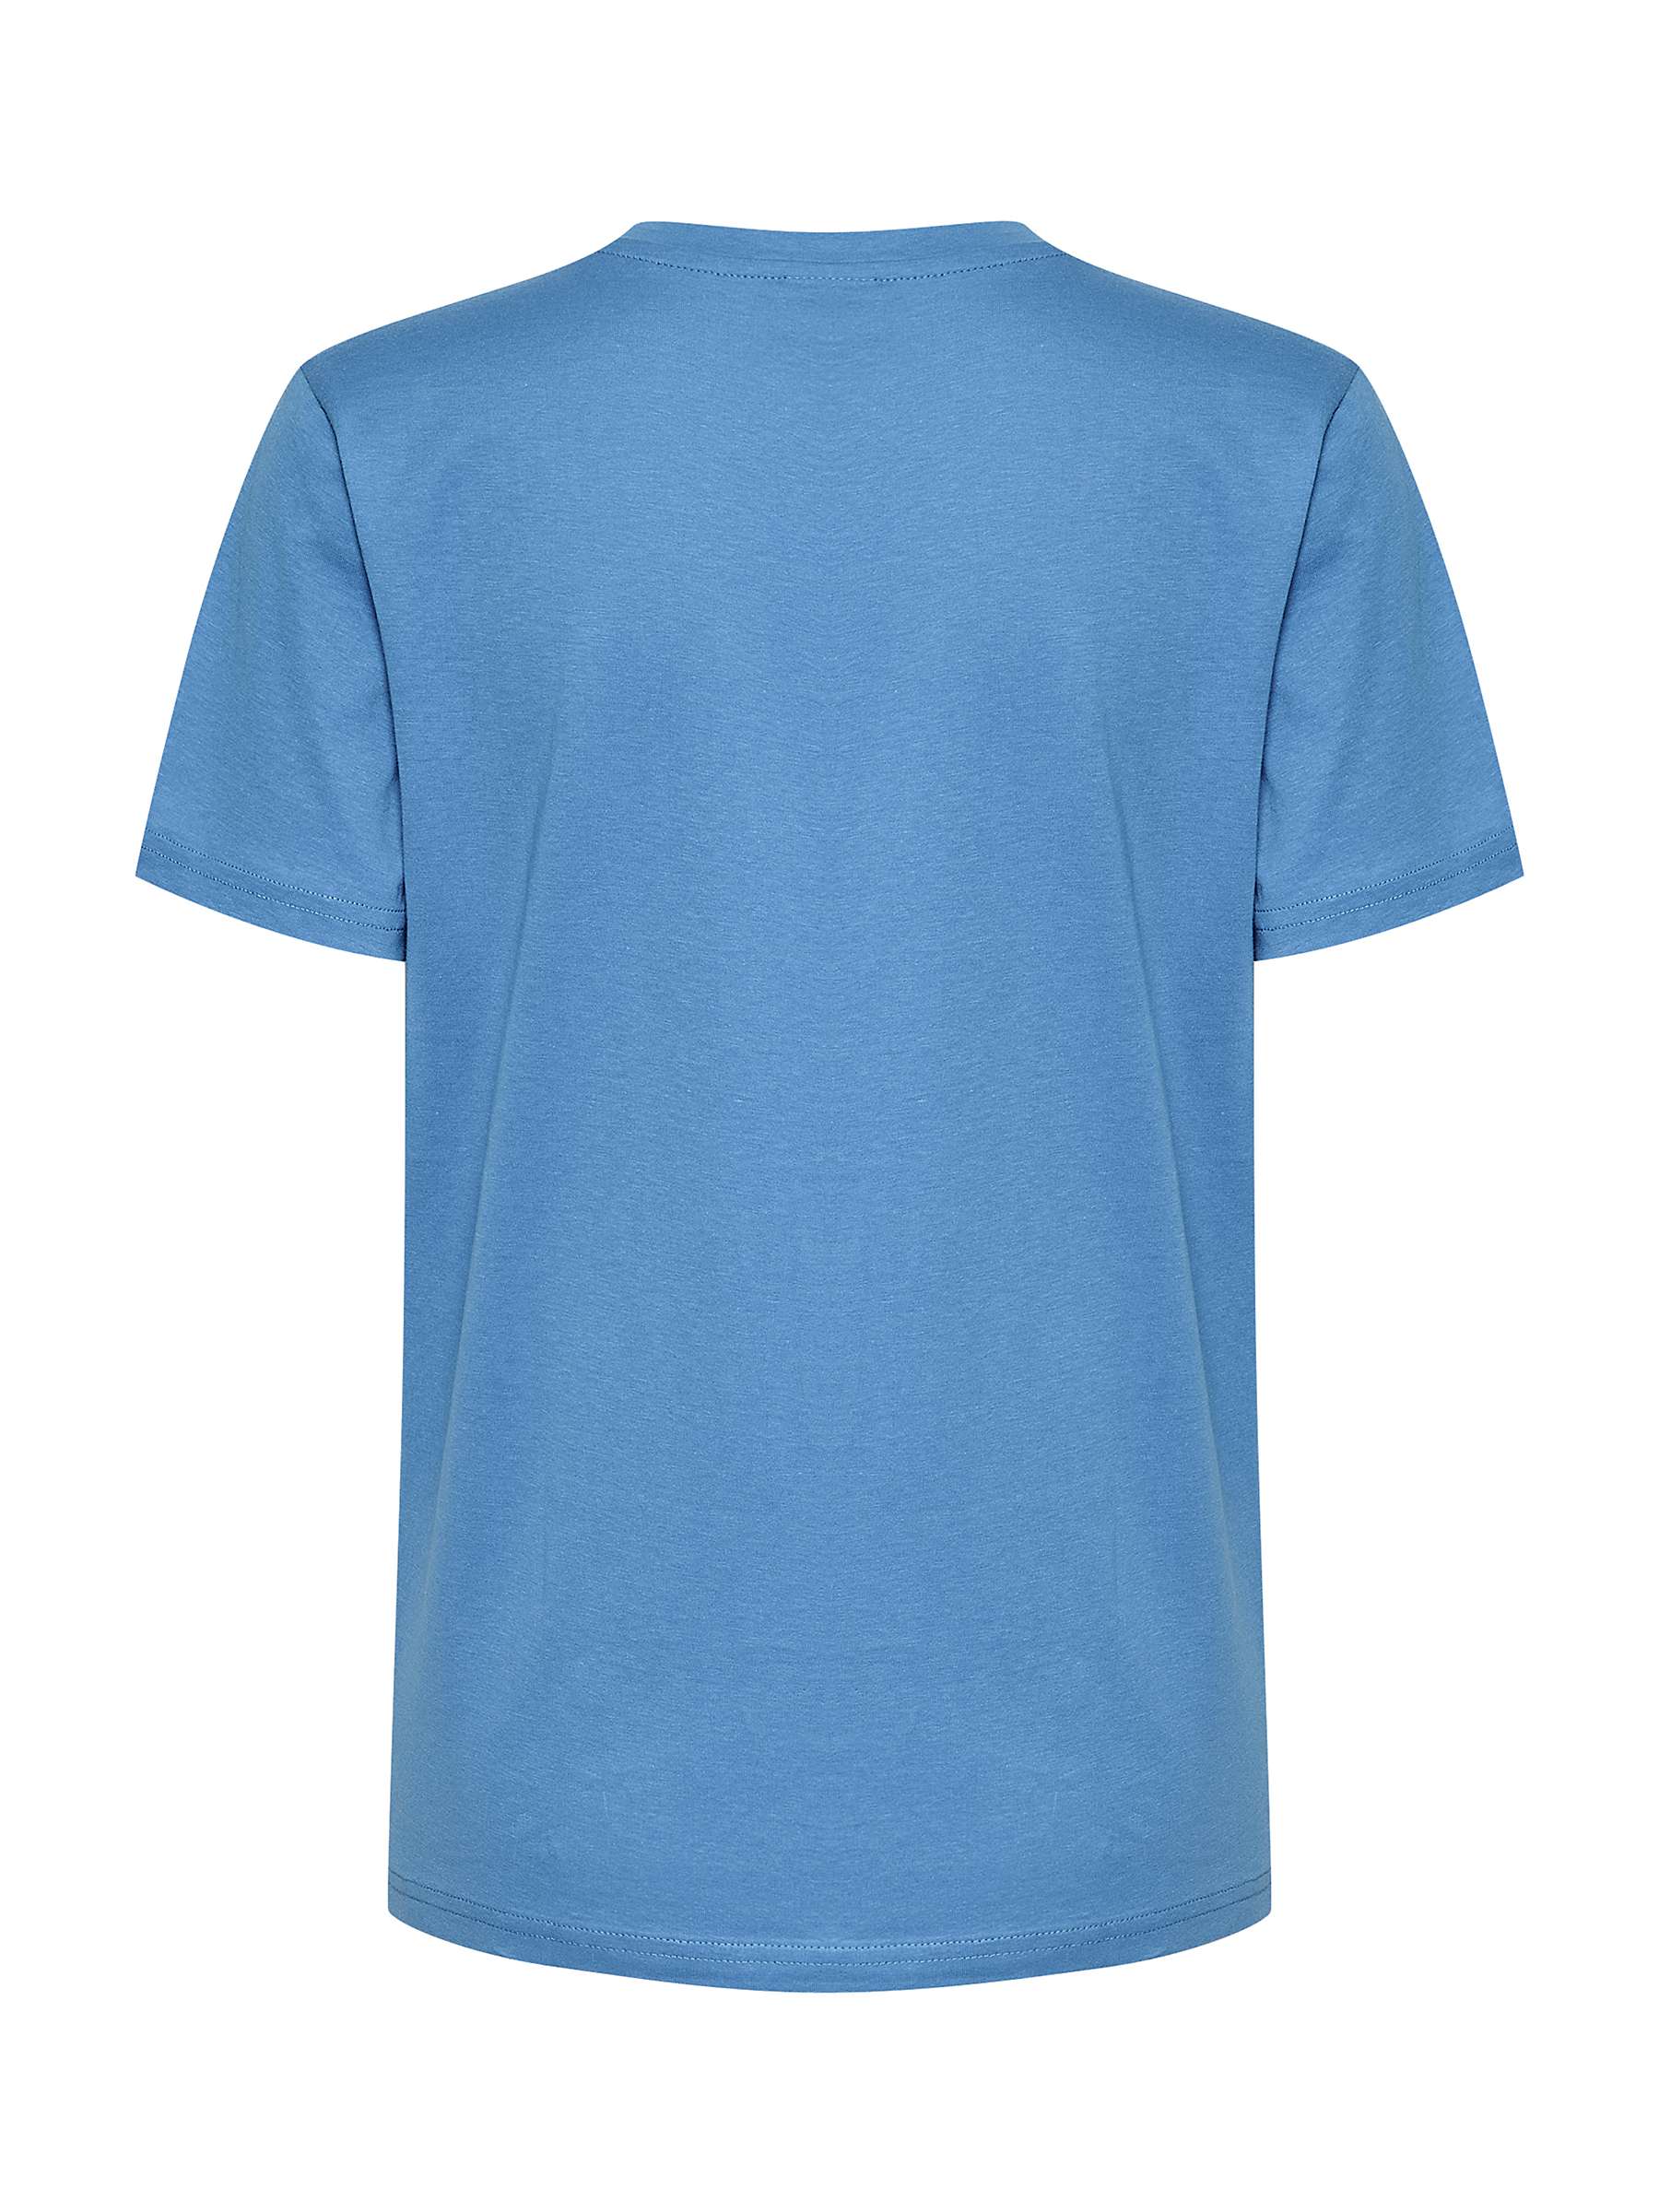 KAFFE Marin Short Sleeve T-Shirt, Regatta at John Lewis & Partners